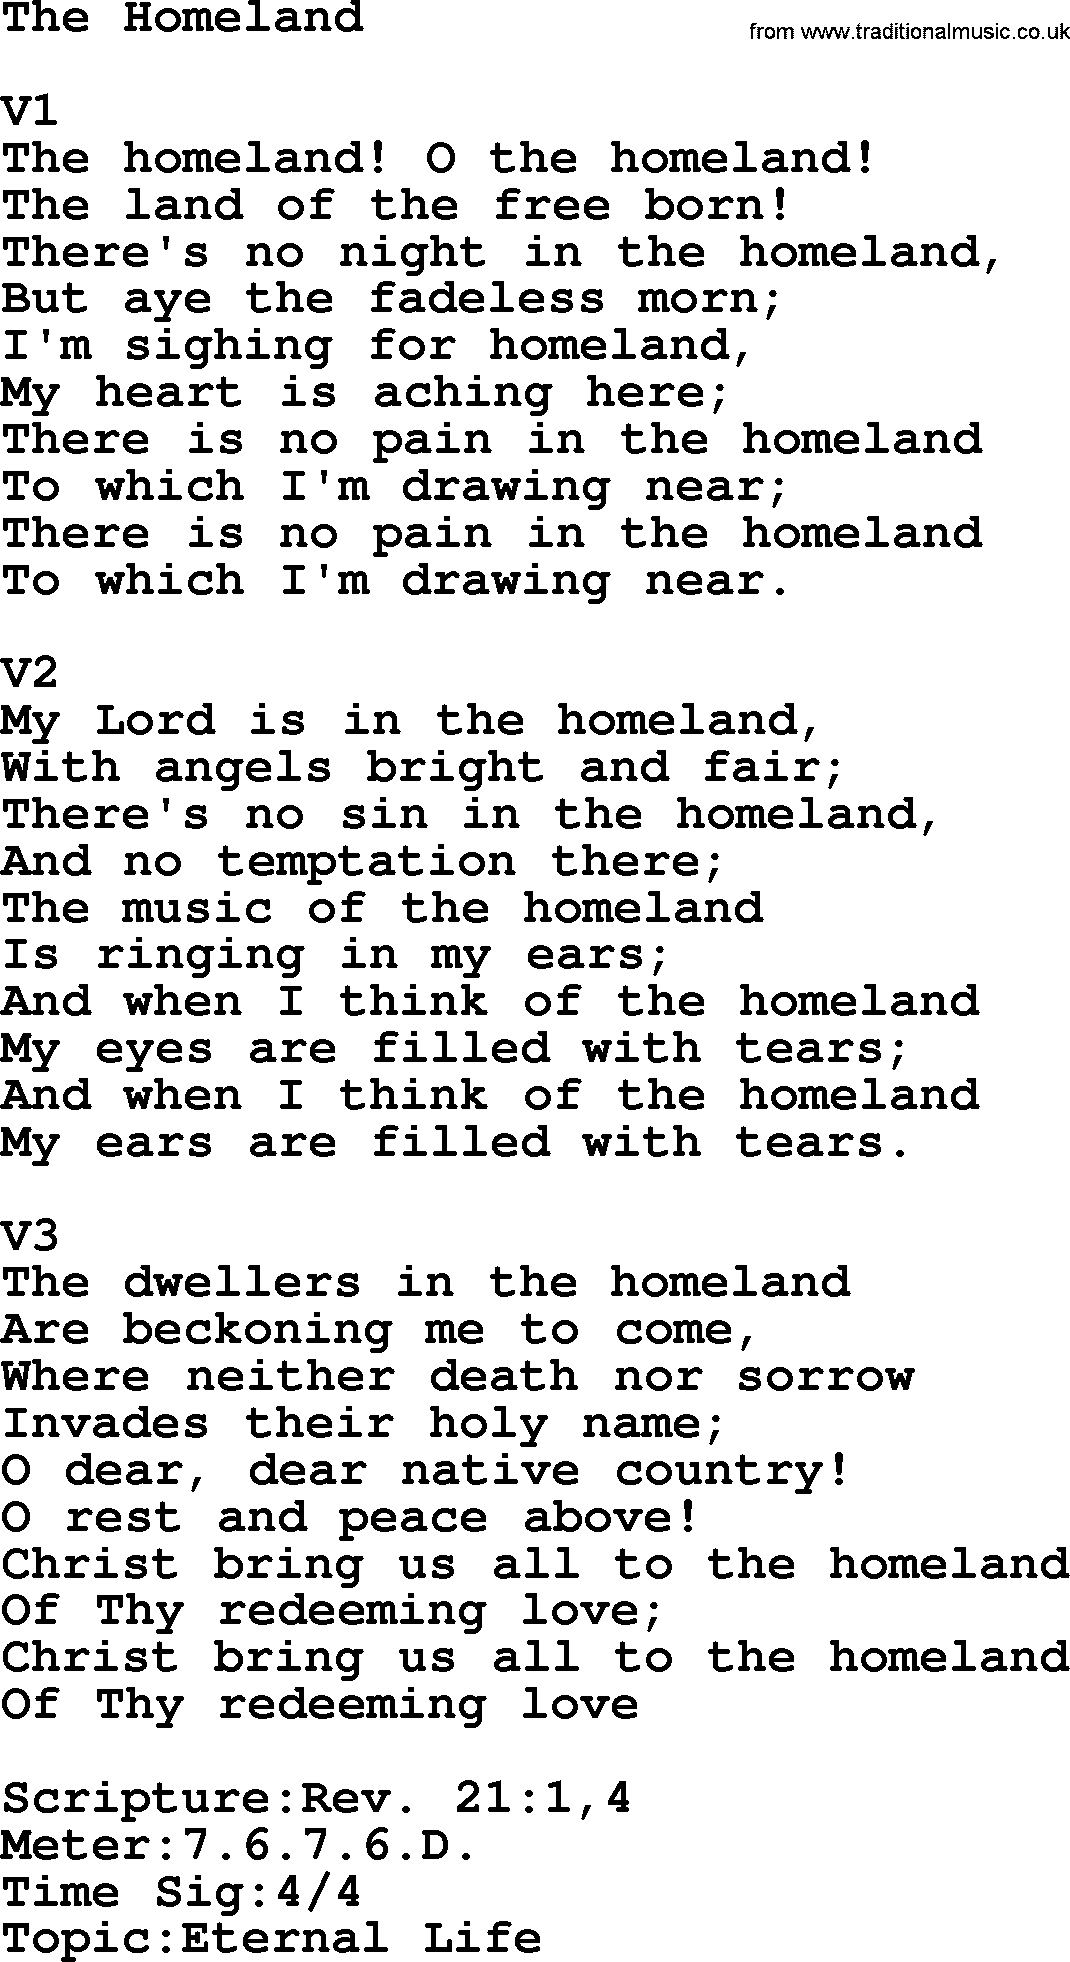 Adventist Hynms collection, Hymn: The Homeland, lyrics with PDF